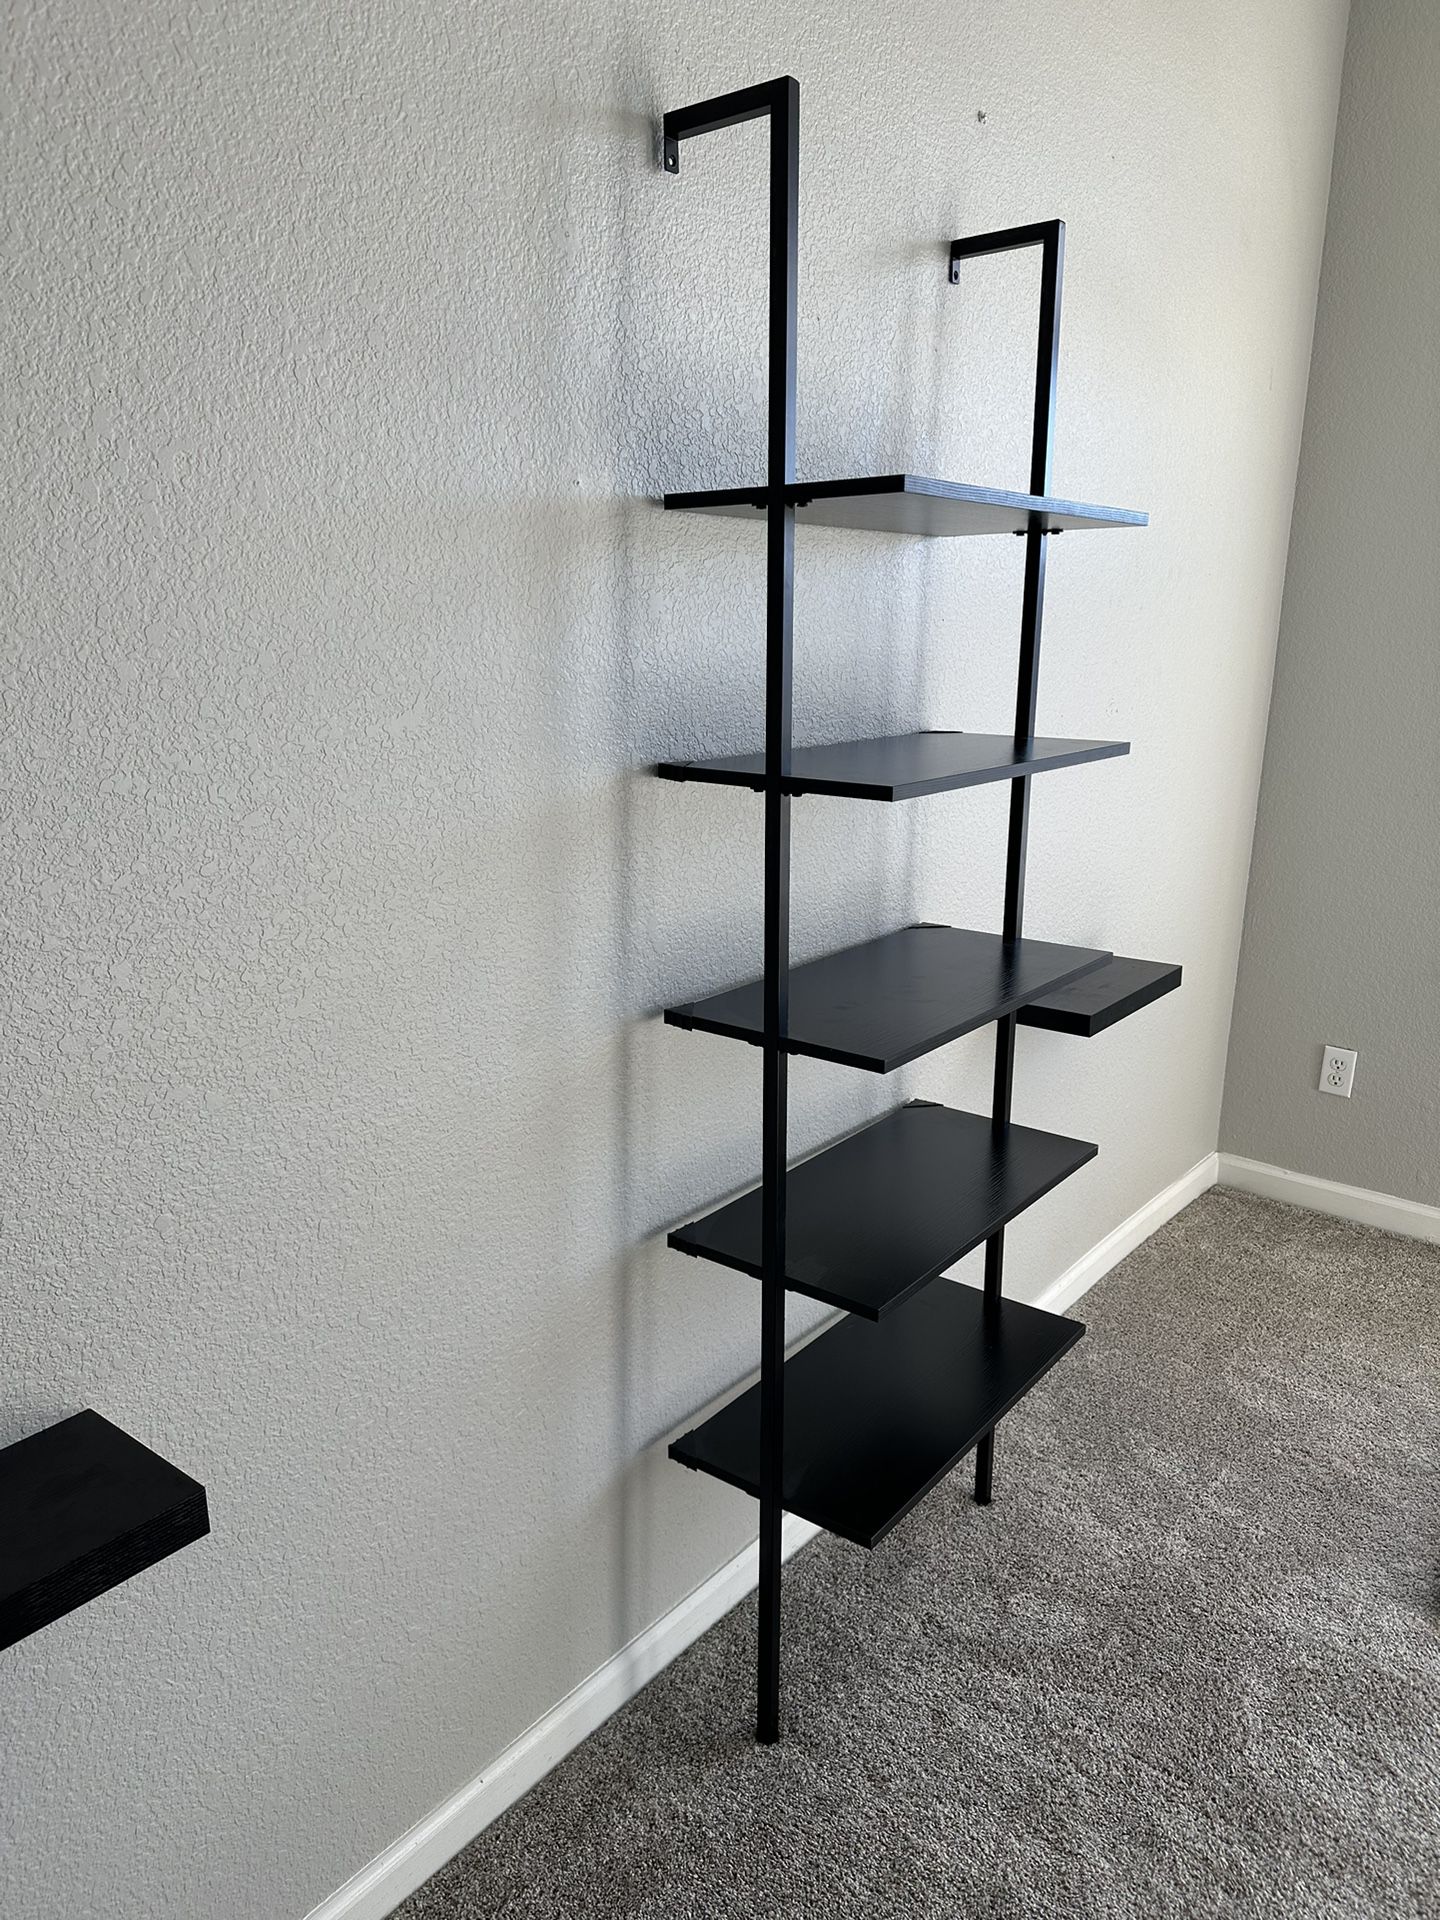 Ladder Shelf (5 Shelves) Attaches To Wall